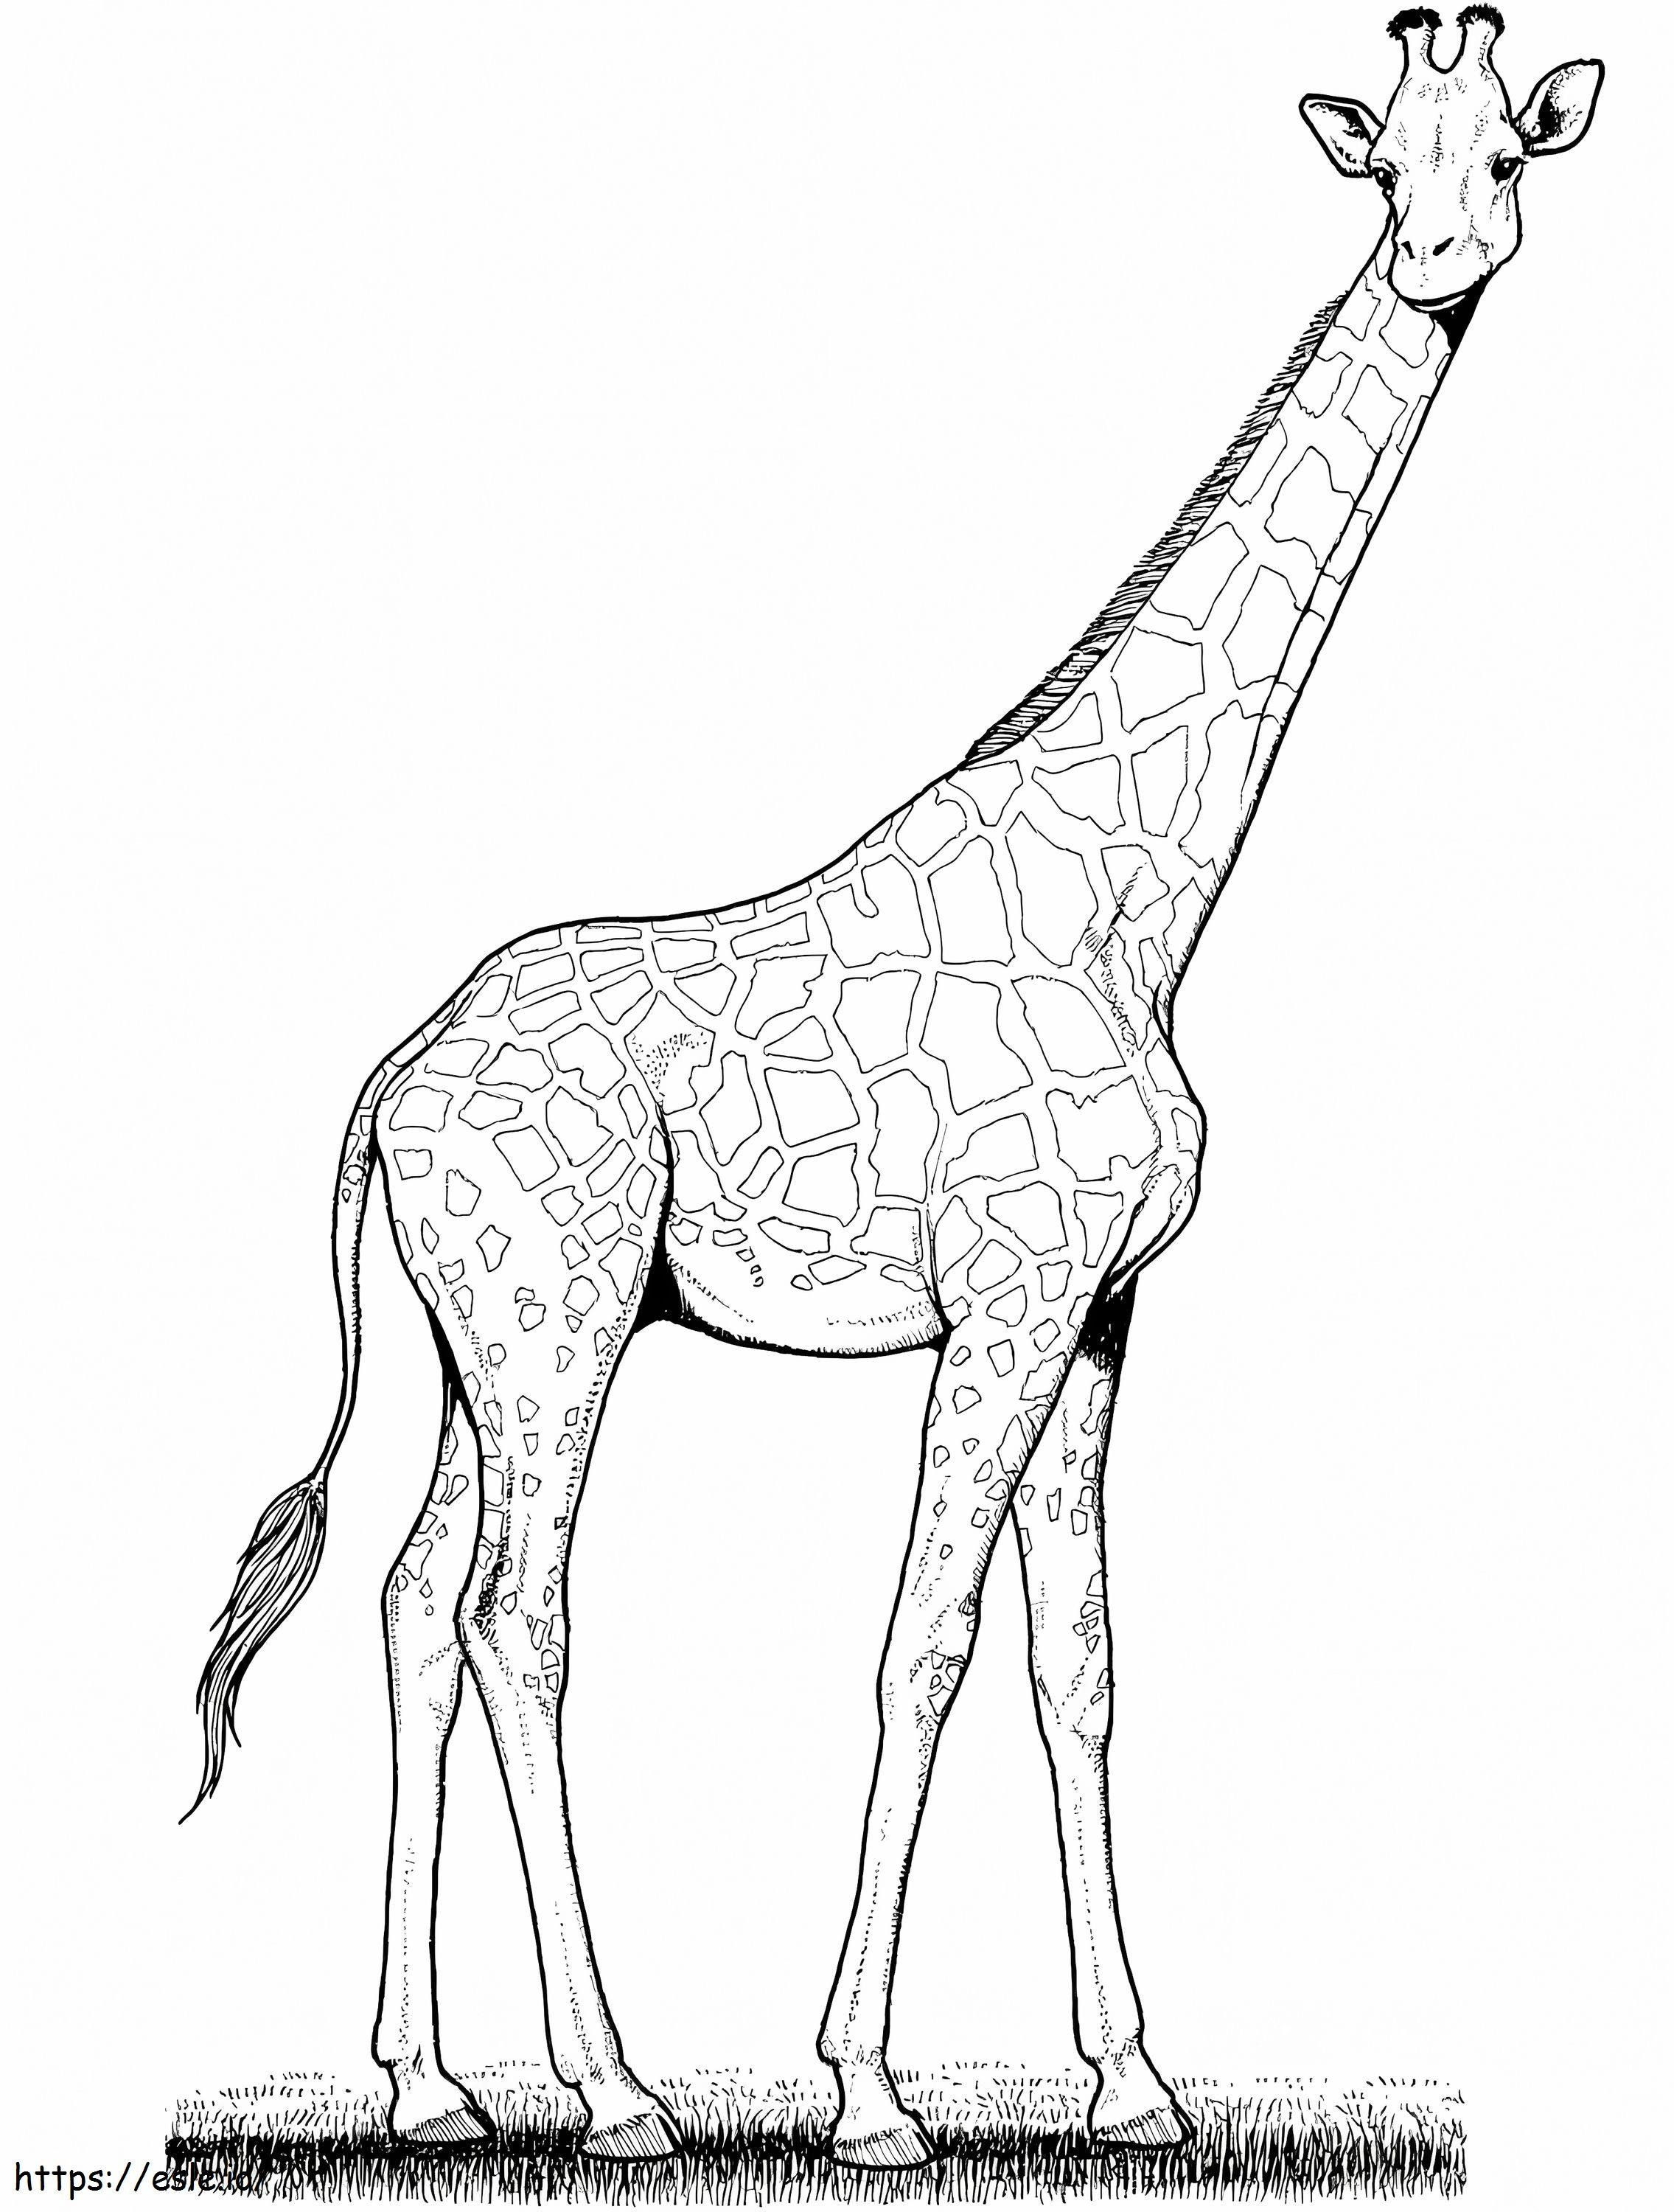 Wilde Giraffe ausmalbilder